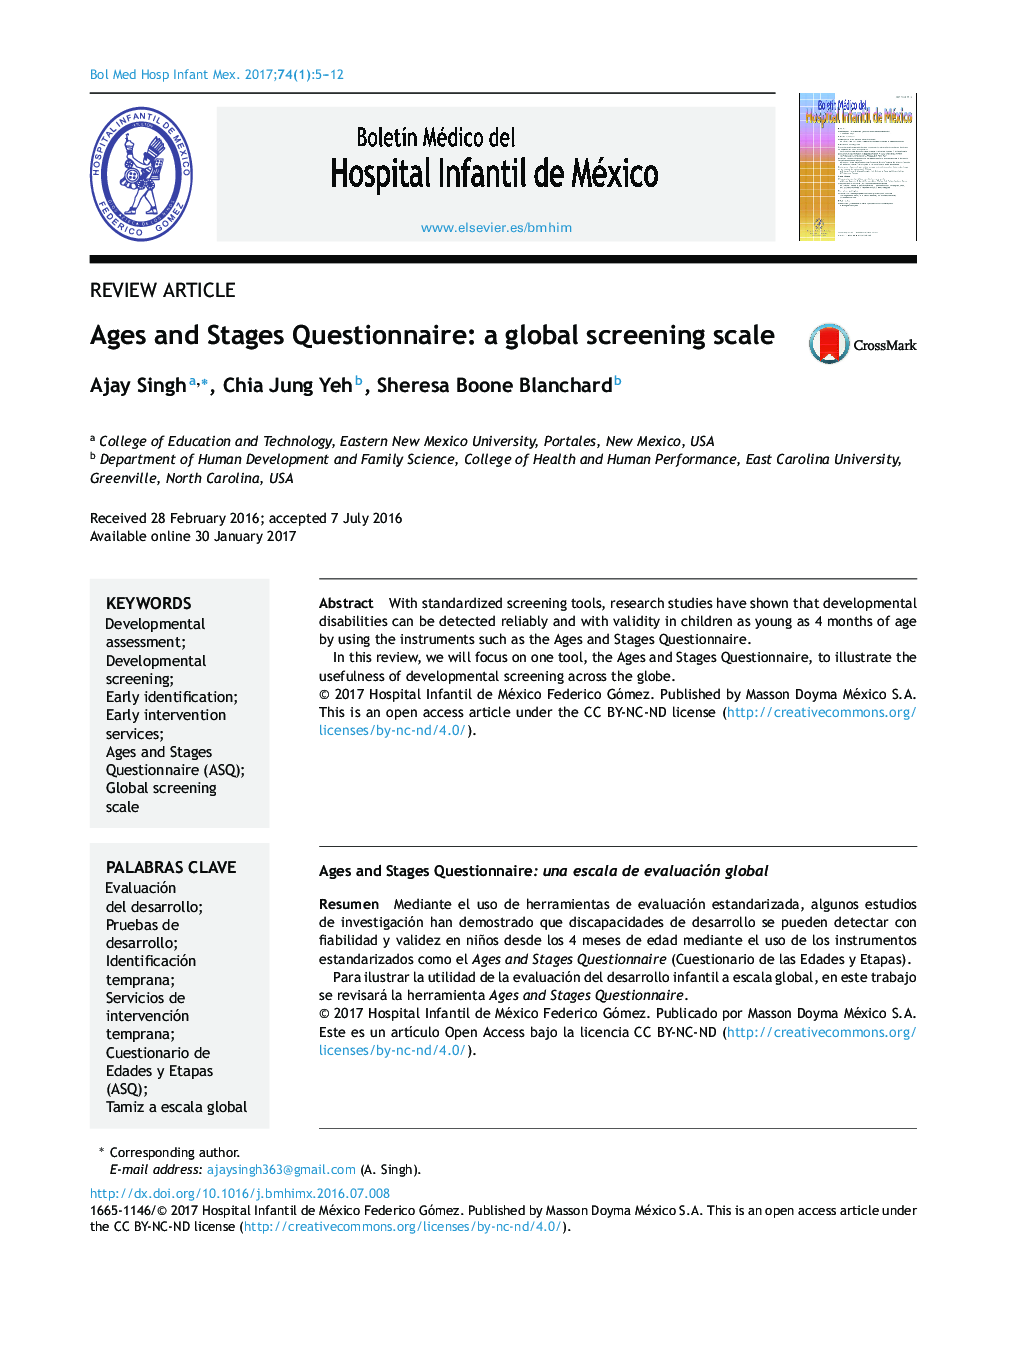 Review articleAges and Stages Questionnaire: a global screening scaleAges and Stages Questionnaire: una escala de evaluación global